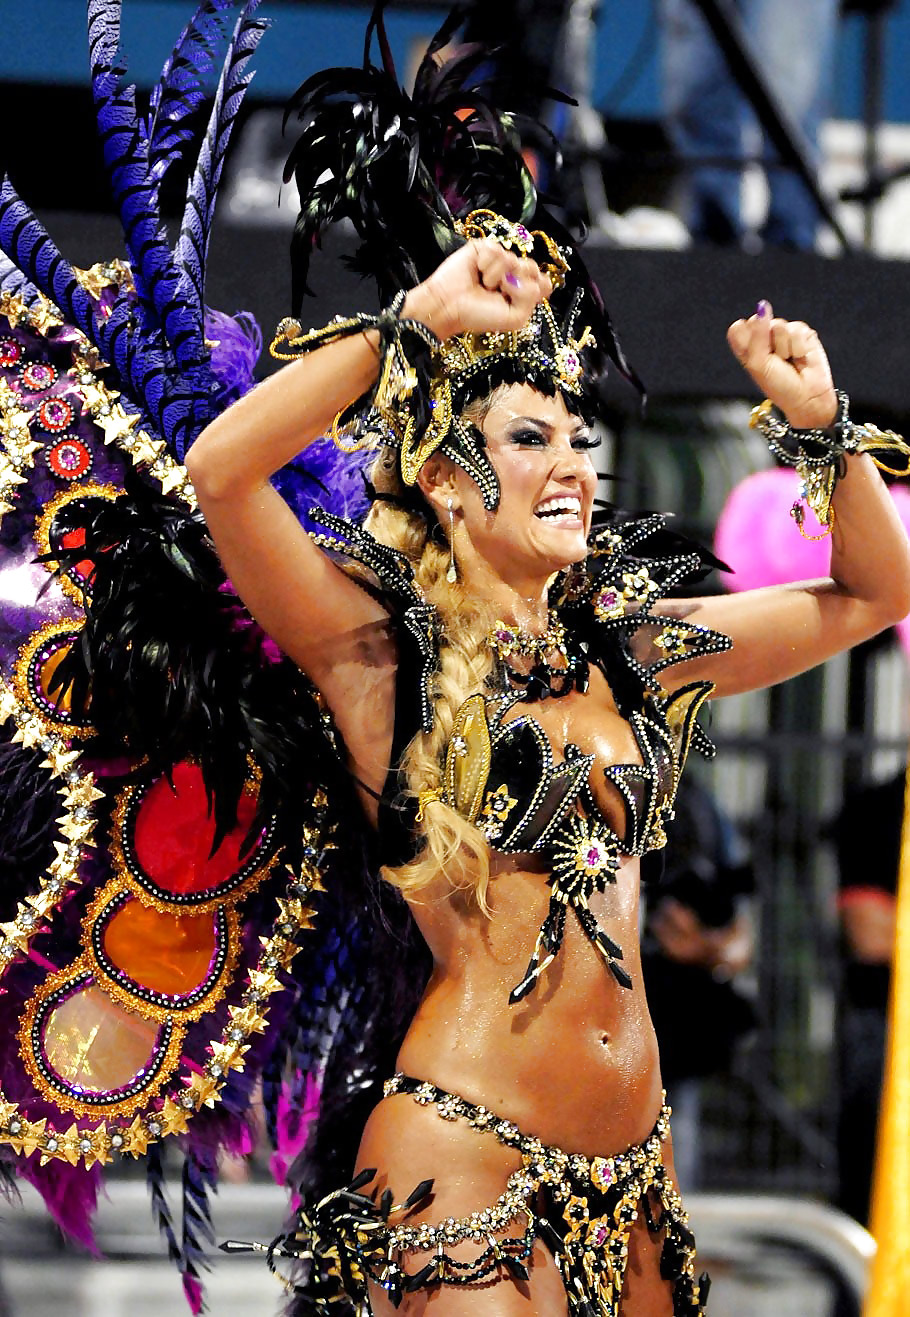 Девушка карнавал. Девушки на карнавале в Рио-де-Жанейро. Бразильянки на карнавале в Рио-де-Жанейро. Карнавал Бразилия девушки. Танцовщицы карнавала в Бразилии.